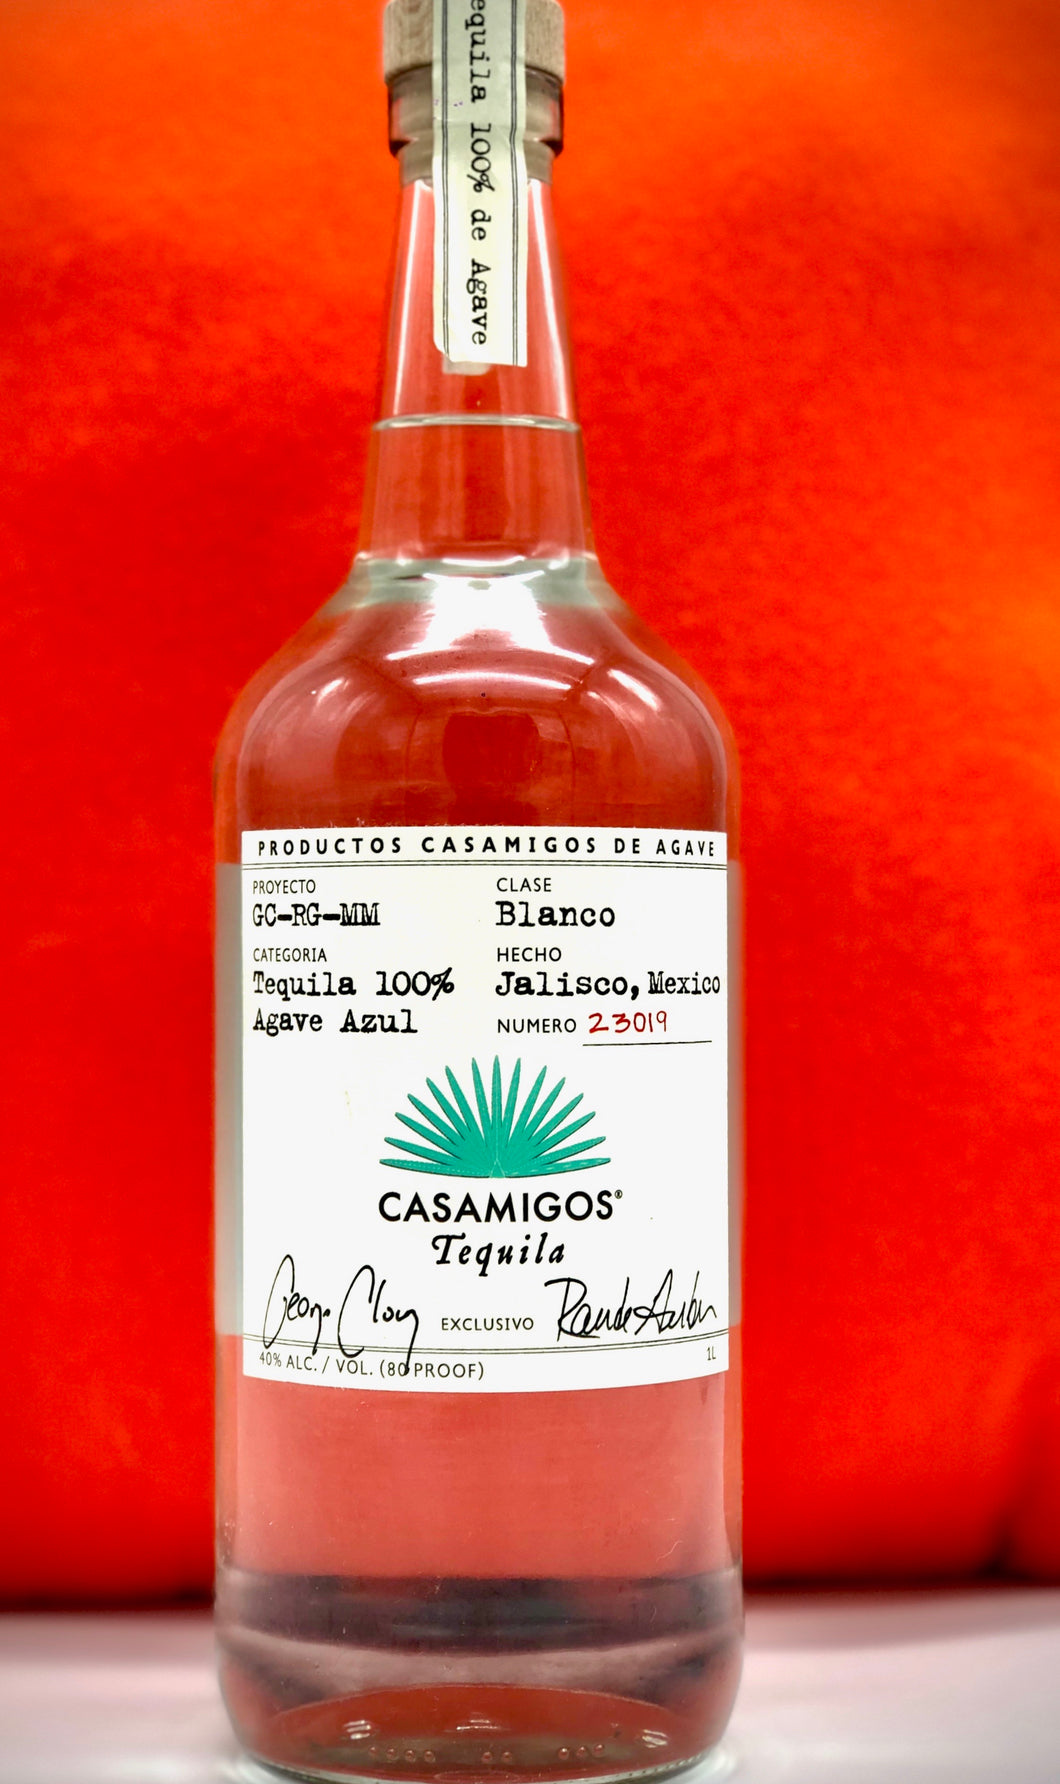 Specialty Liquor | George Clooney Casamigos Tequila